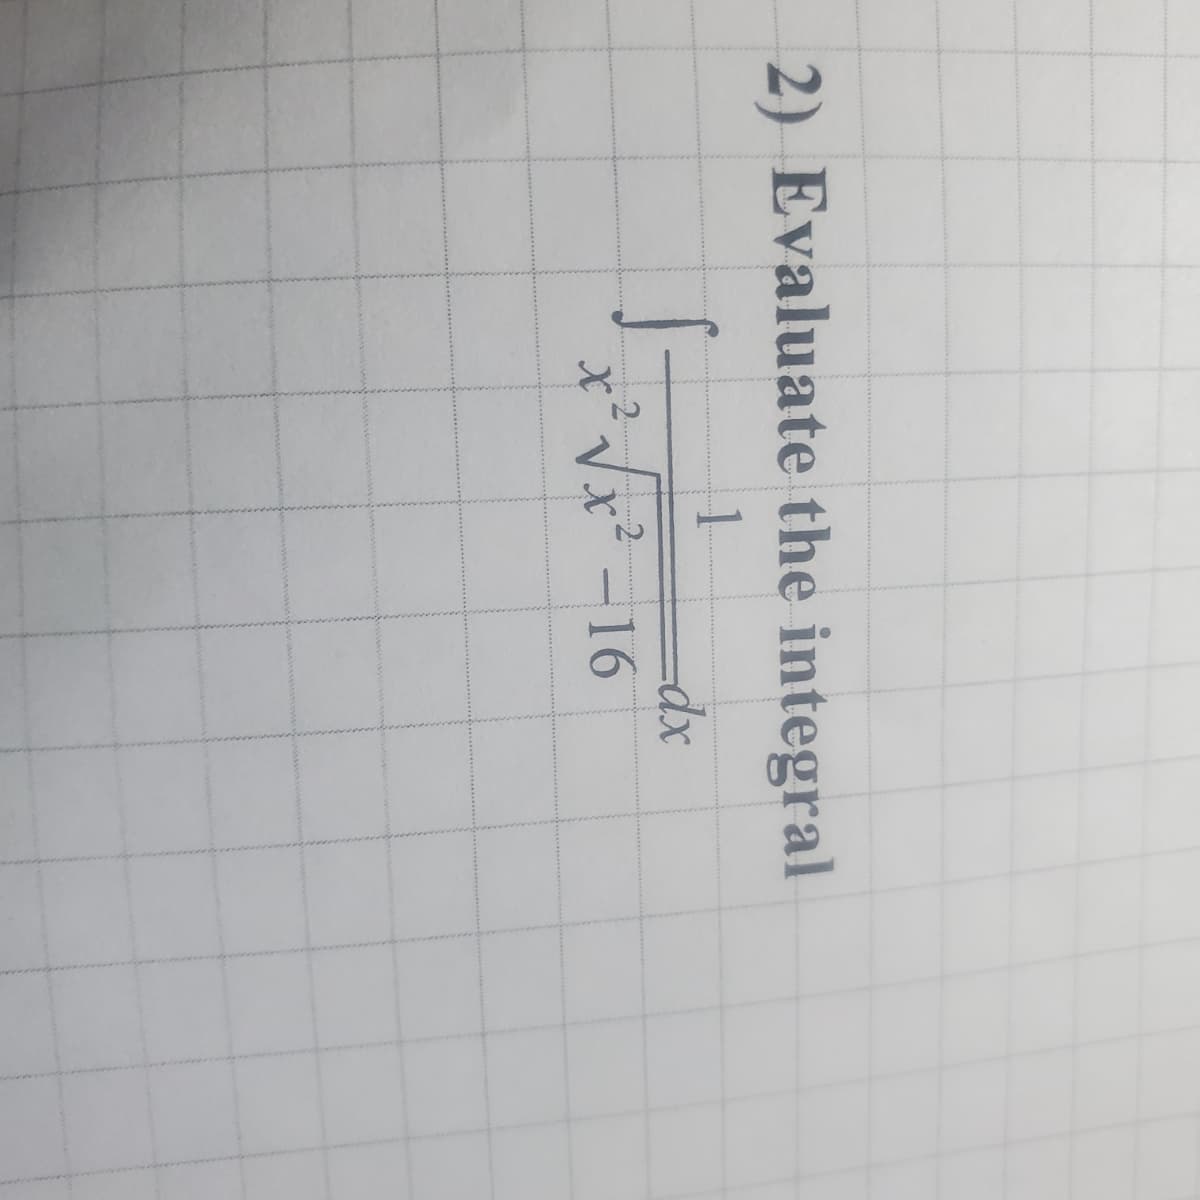 2) Evaluate the integral
1
xp=
x² Vx² -16
